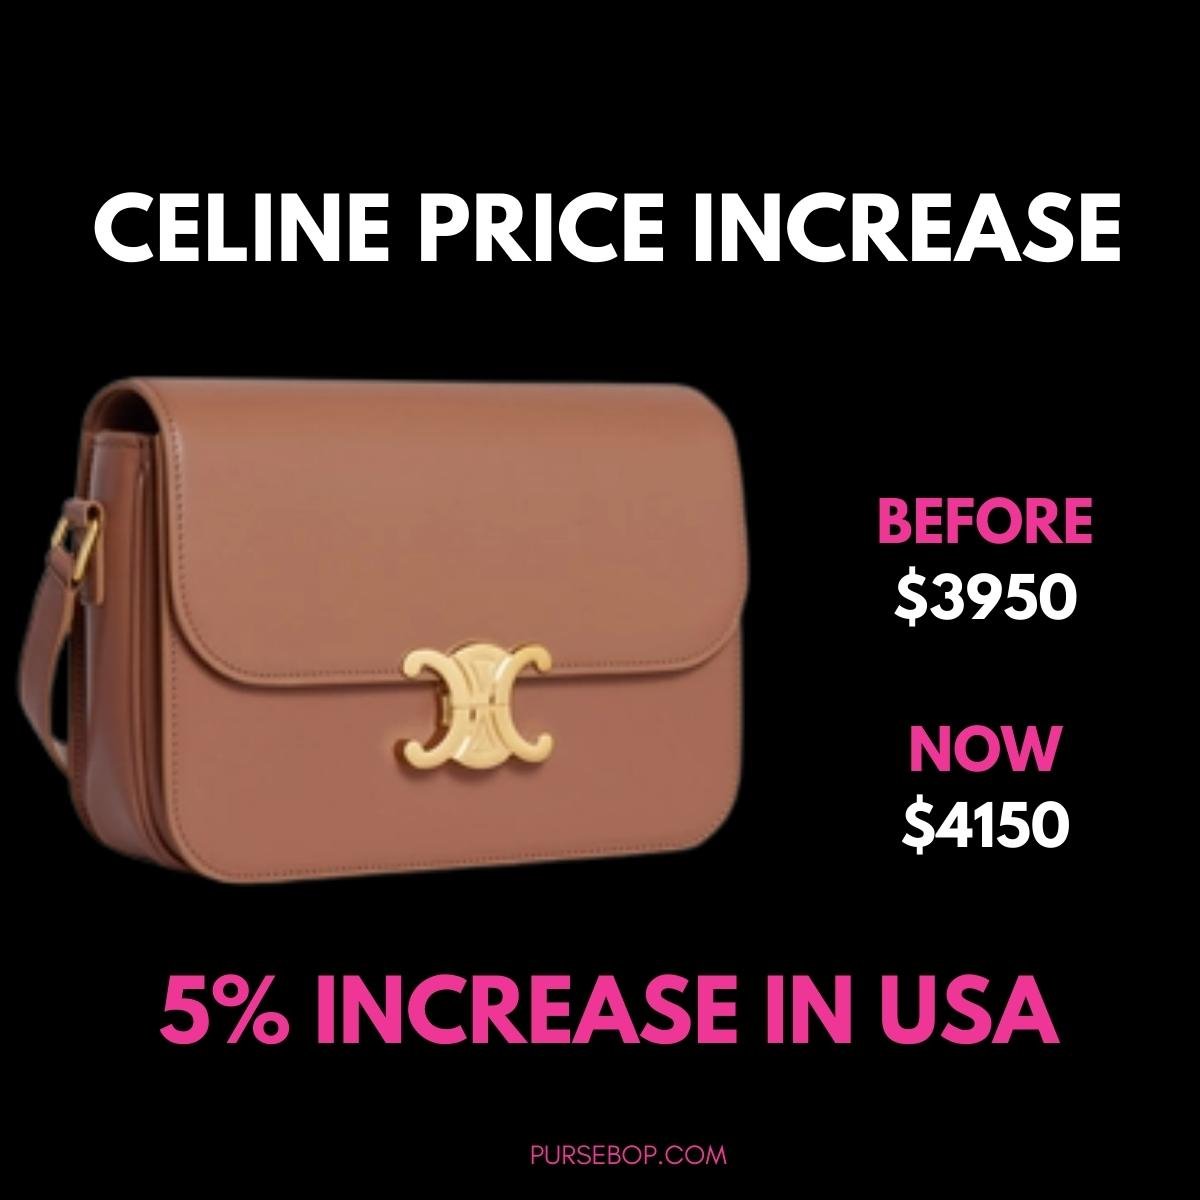 Celine's New Ava Triomphe Bag Is Already a Celeb Favourite